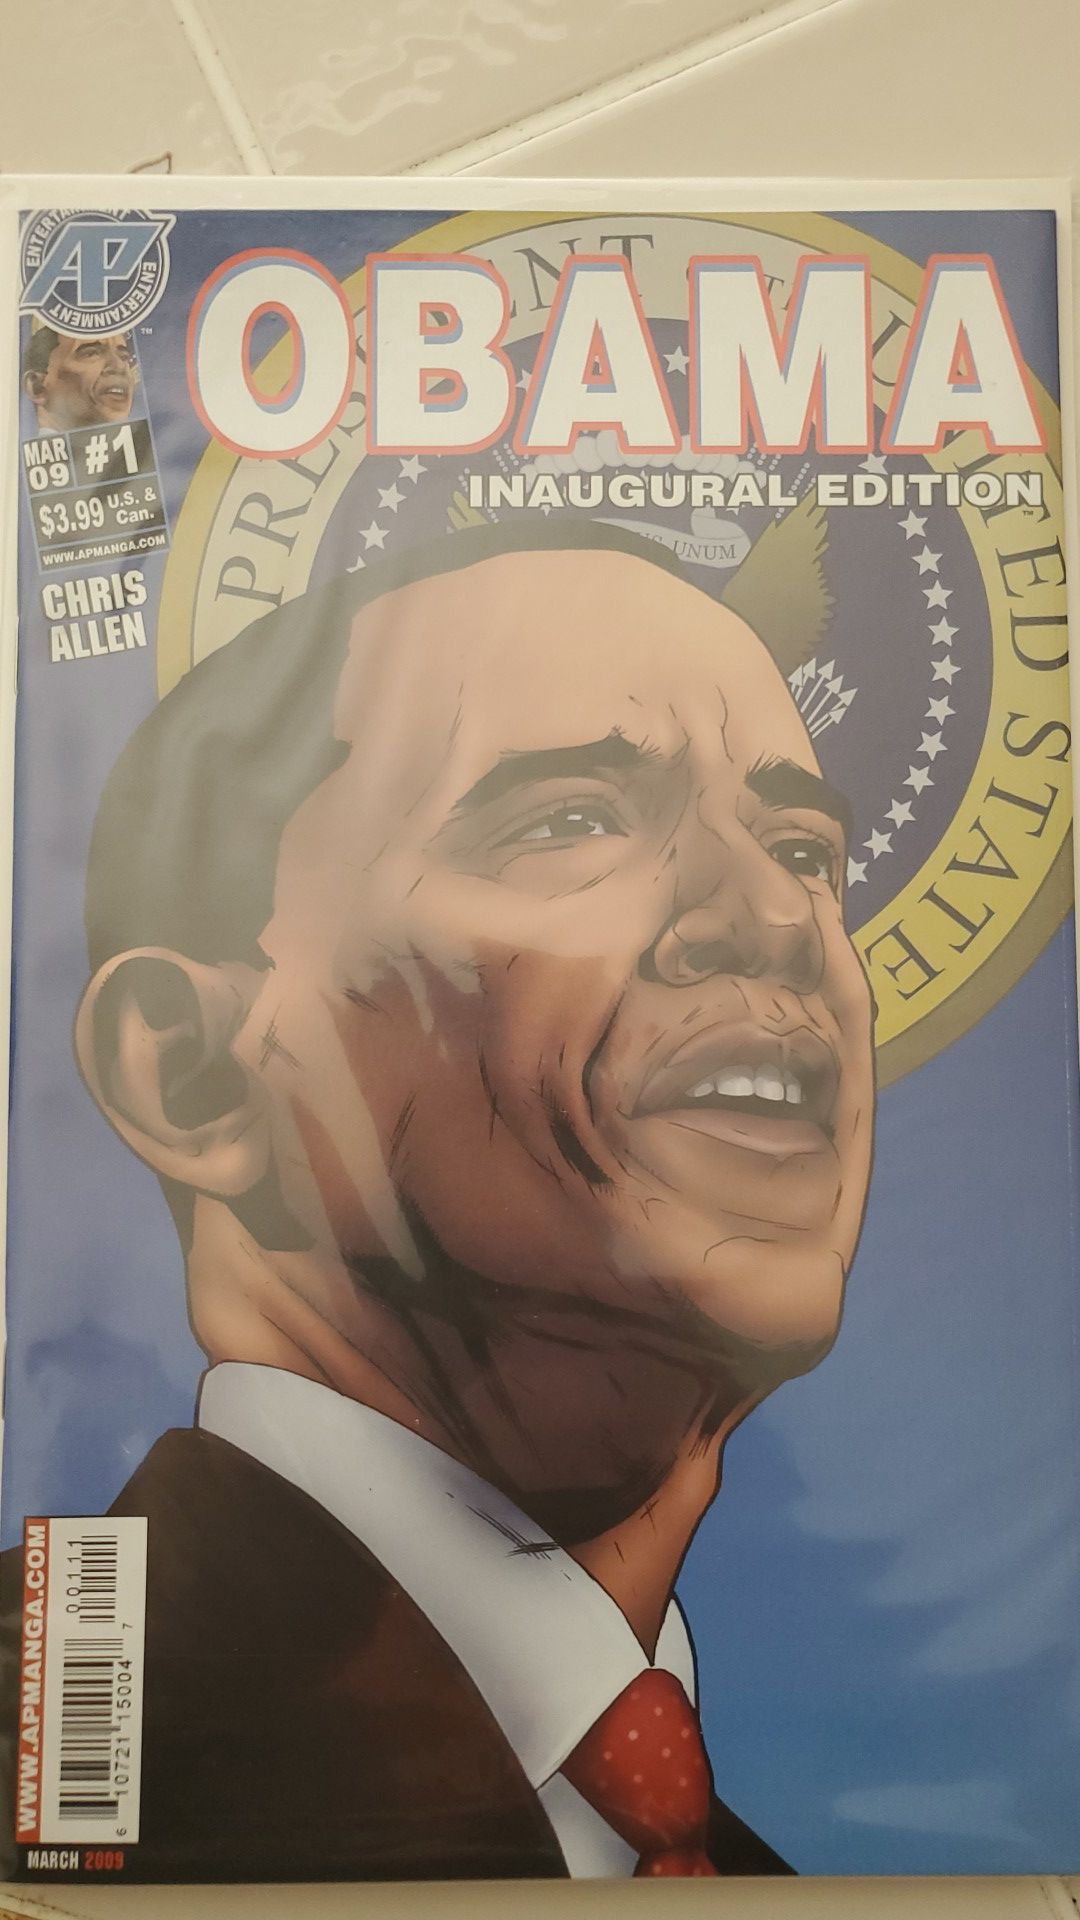 Obama inaugural edition comic book